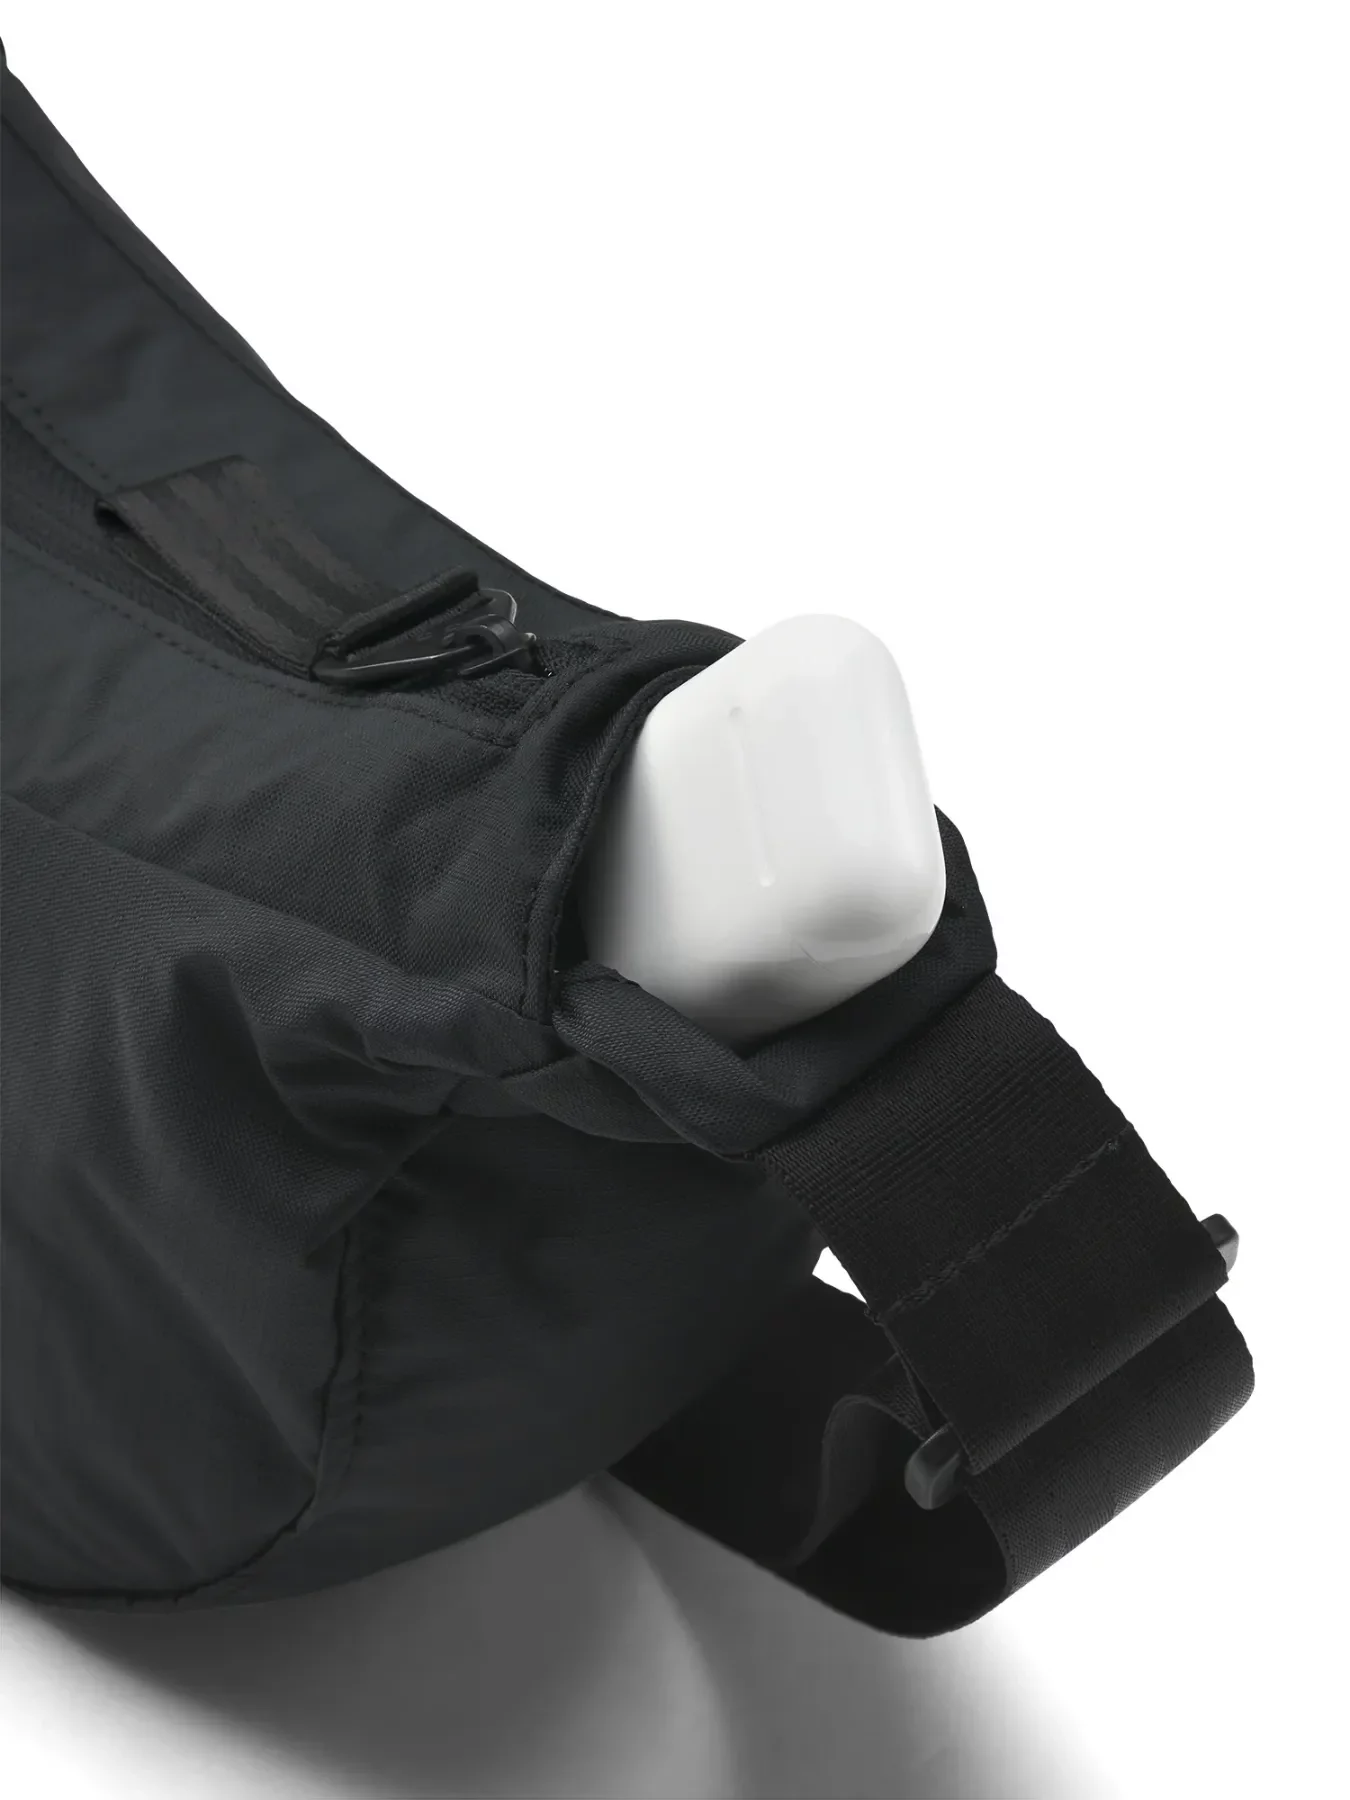 pinqponq Backpack KRUMM SMALL - PURE BLACK 4